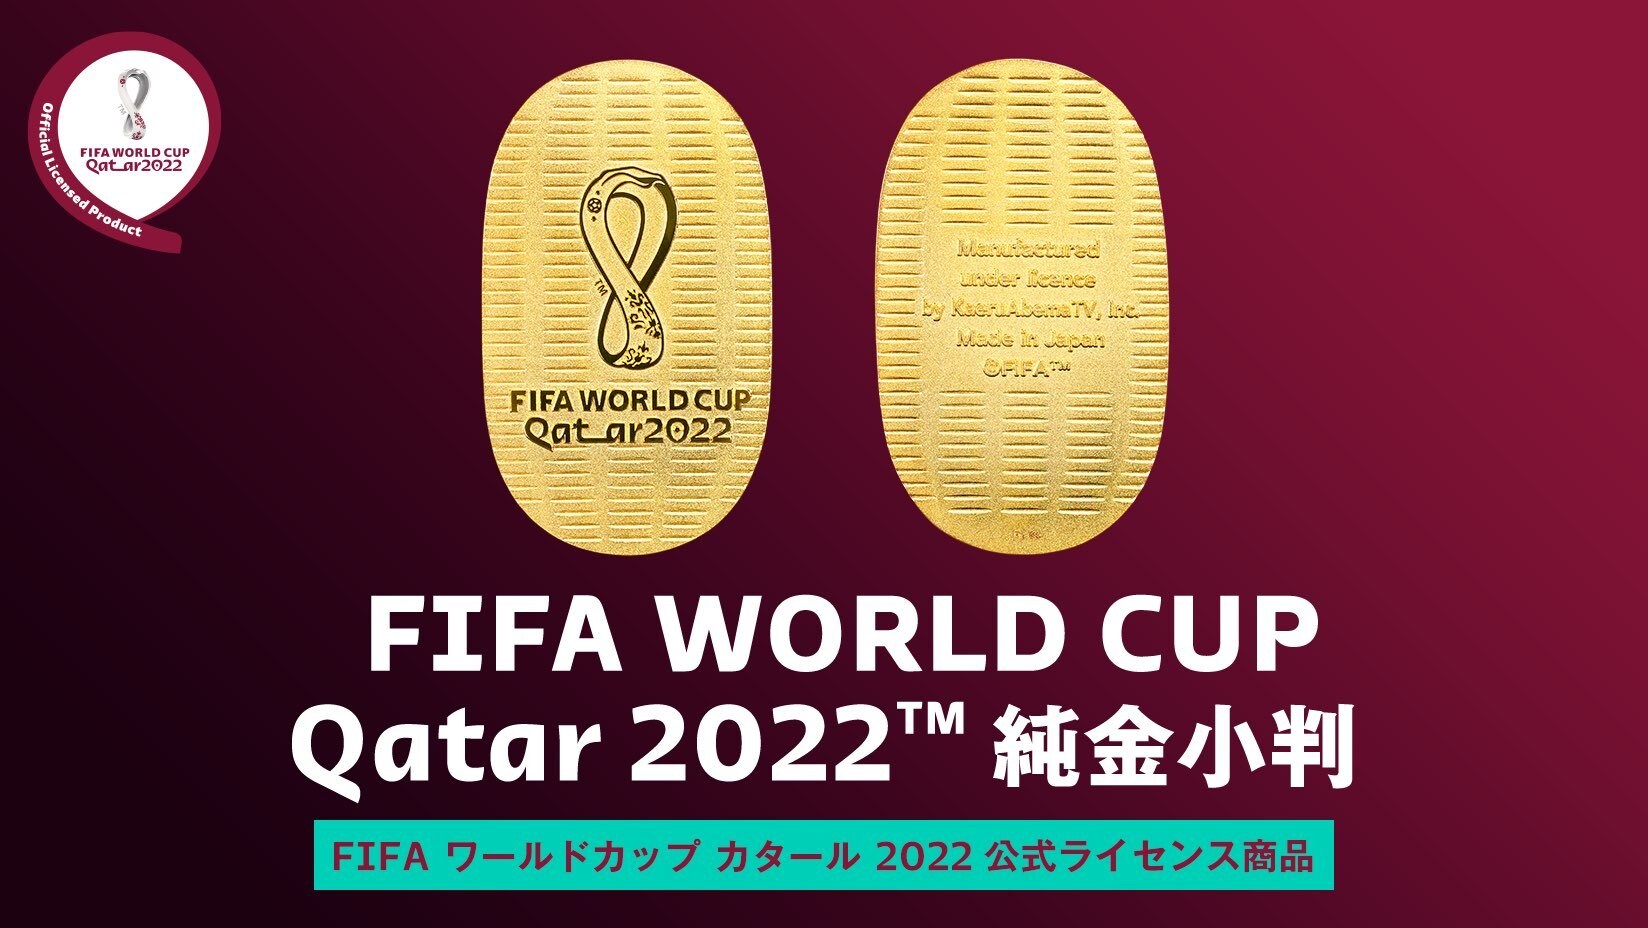 Fifa公式のワールドカップ記念純金小判 予約販売を開始 小判がプレゼントされるキャンペーンも開催 完全ガイド Fifa ワールドカップ 22 完全ガイド By Abema